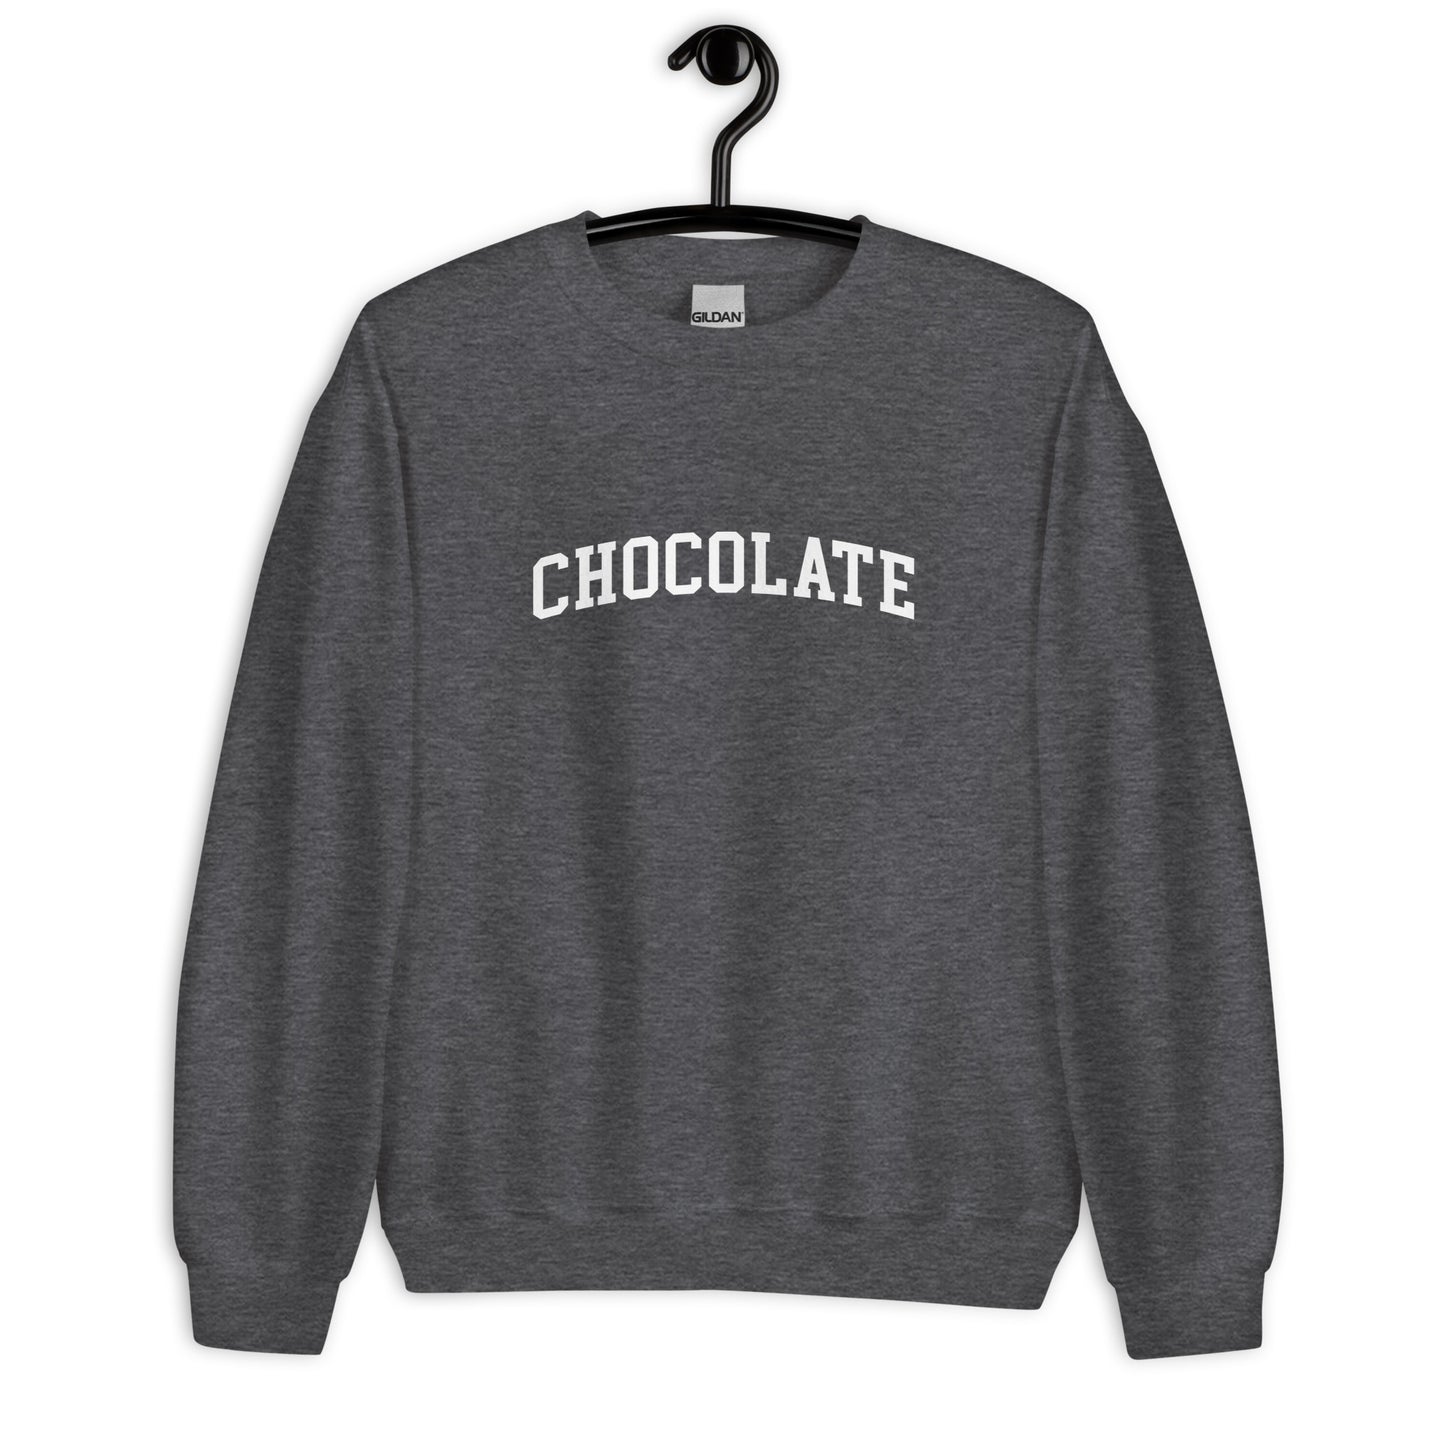 Chocolate Sweatshirt - Arched Font